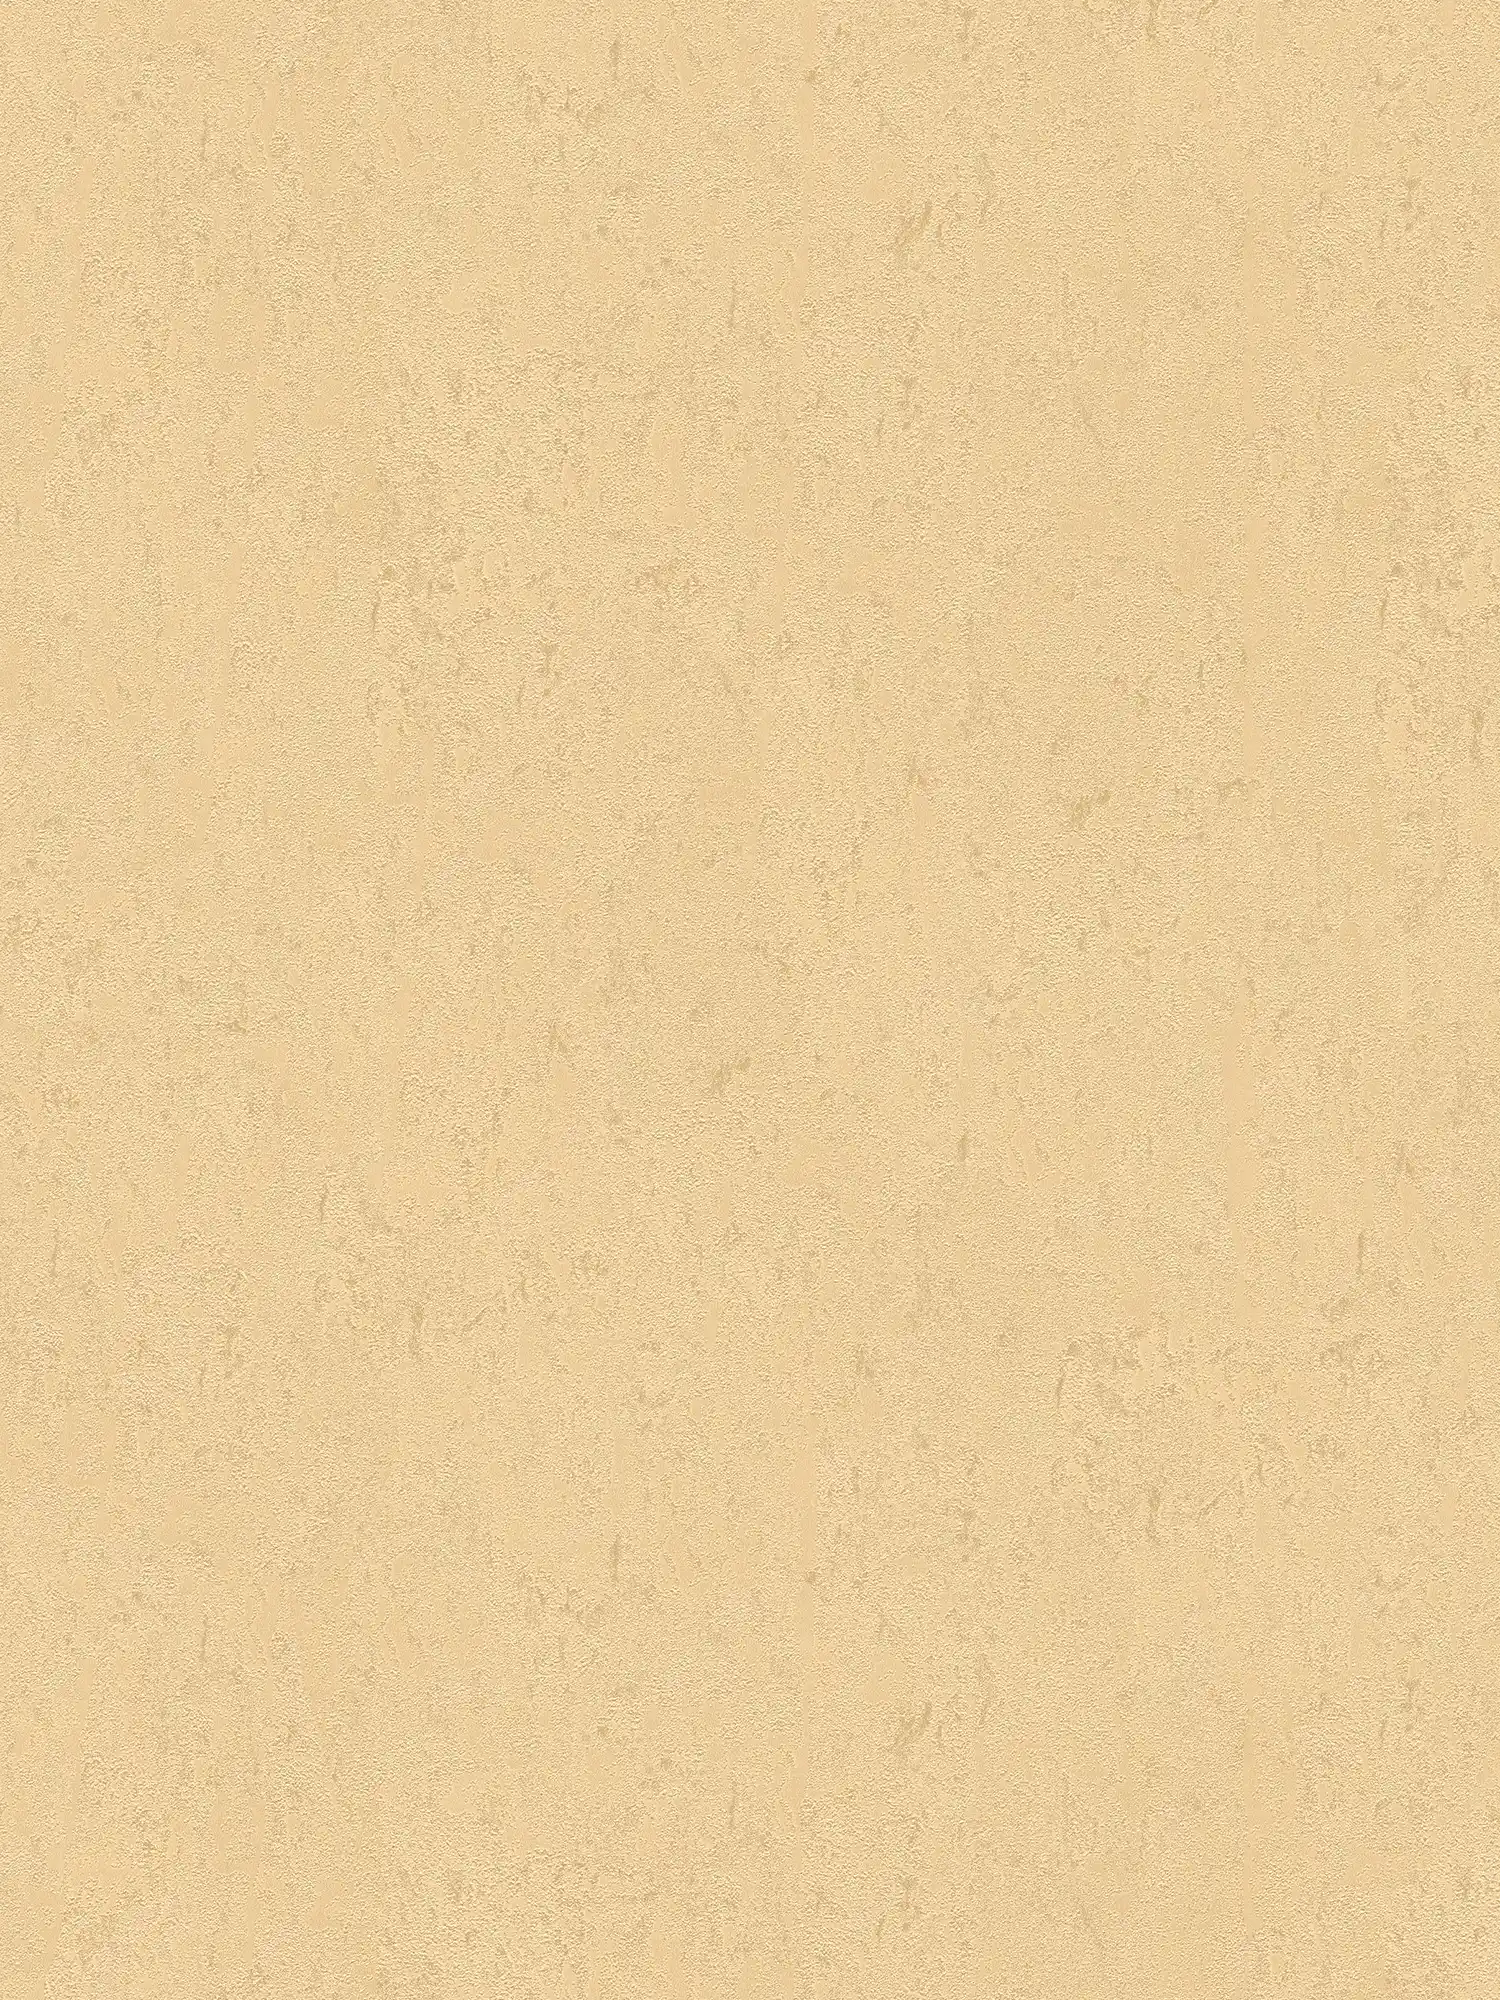 Non-woven wallpaper gold bright metallic uni with texture pattern
